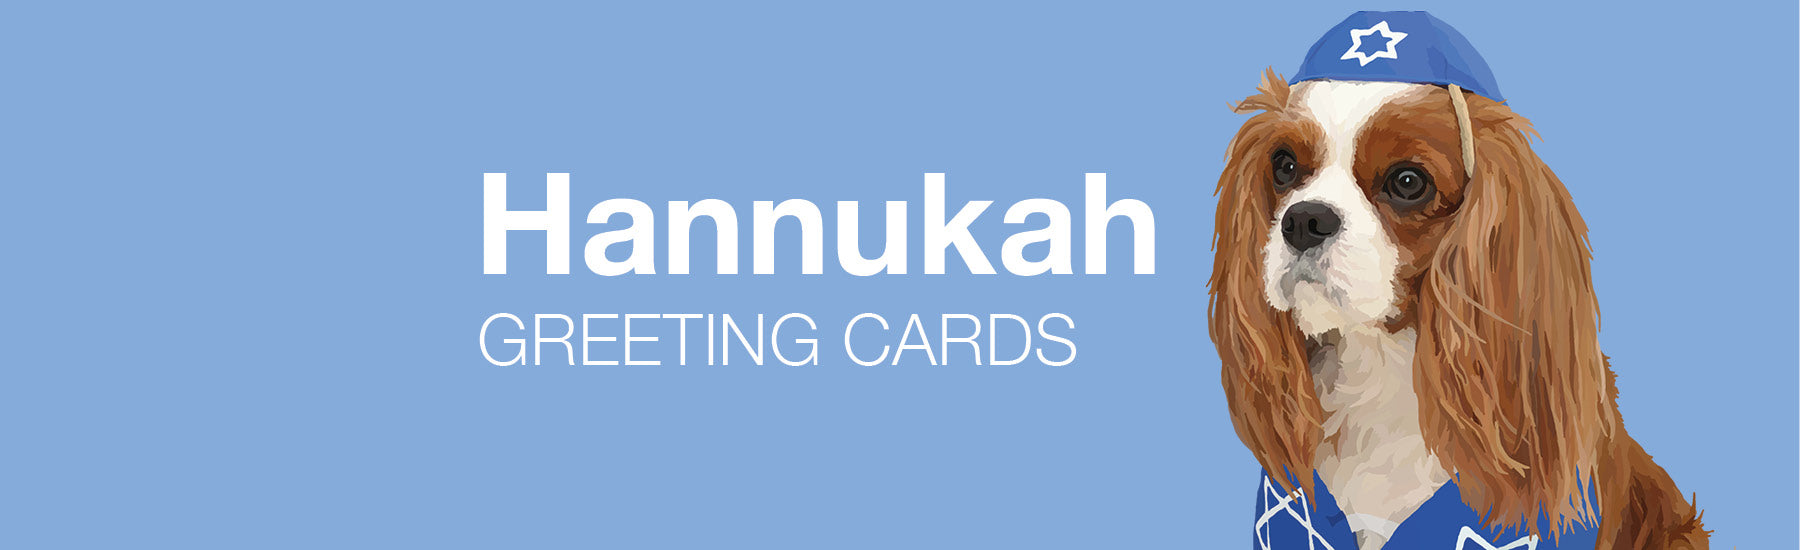 HANNUKAH GREETING CARDS